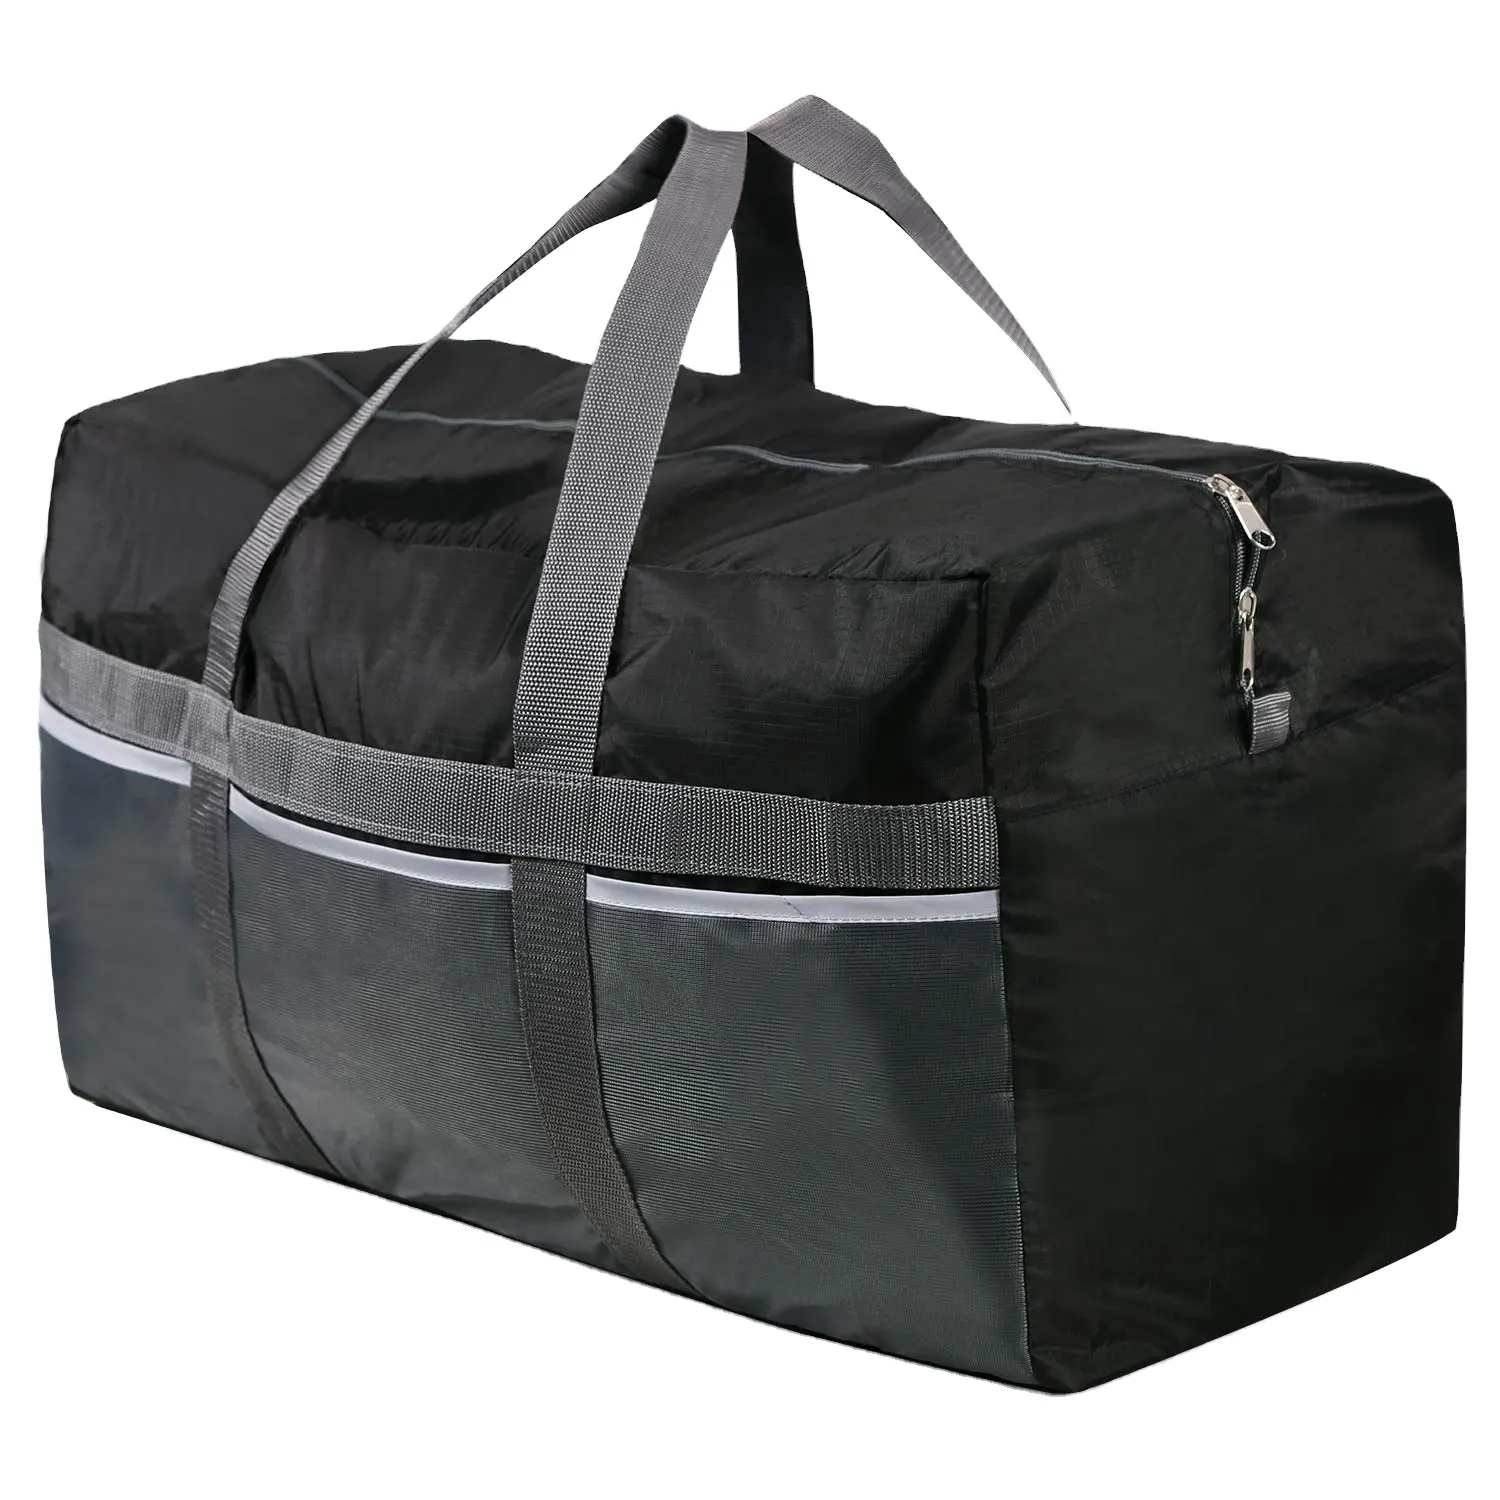 Lightweight Travel Bag Foldable New Style Duffel Bag Waterproof Luggage Bag